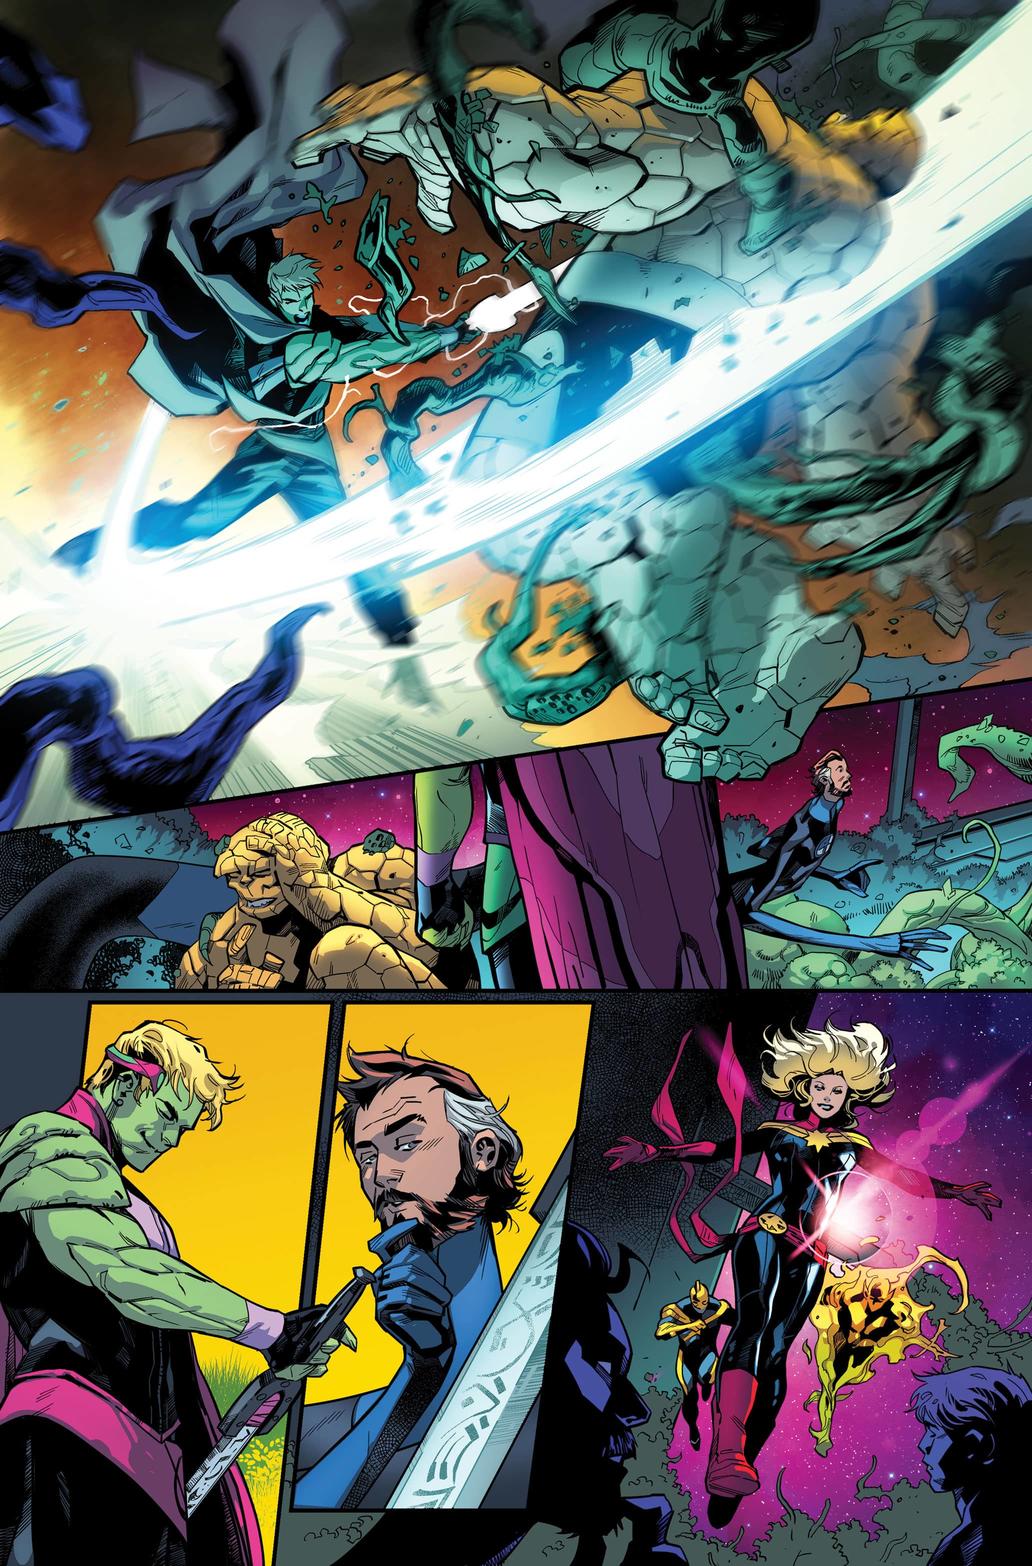 Preview de Empyre #1 - Marvel Comics - Blog Farofeiros